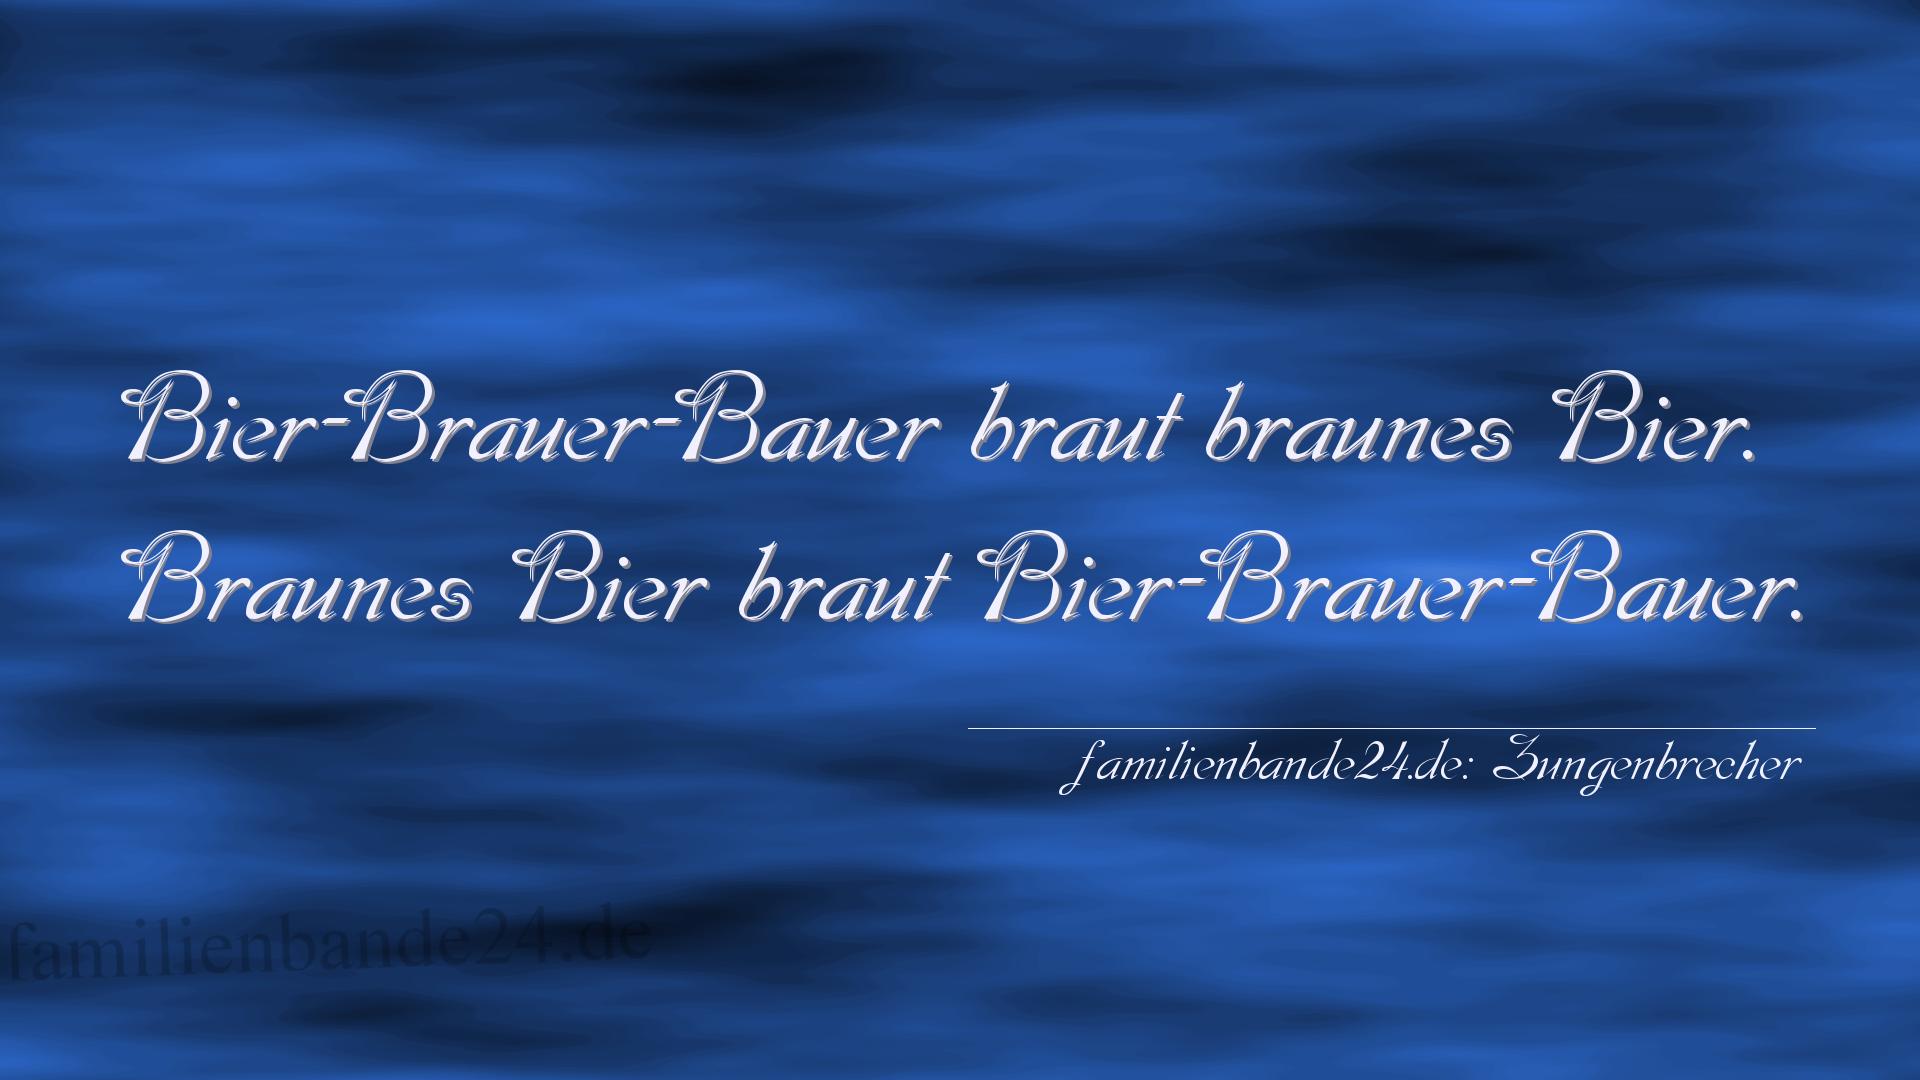 Zungenbrecher Nummer 1705: Bier-Brauer-Bauer braut braunes Bier.
Braunes Bier braut  [...]